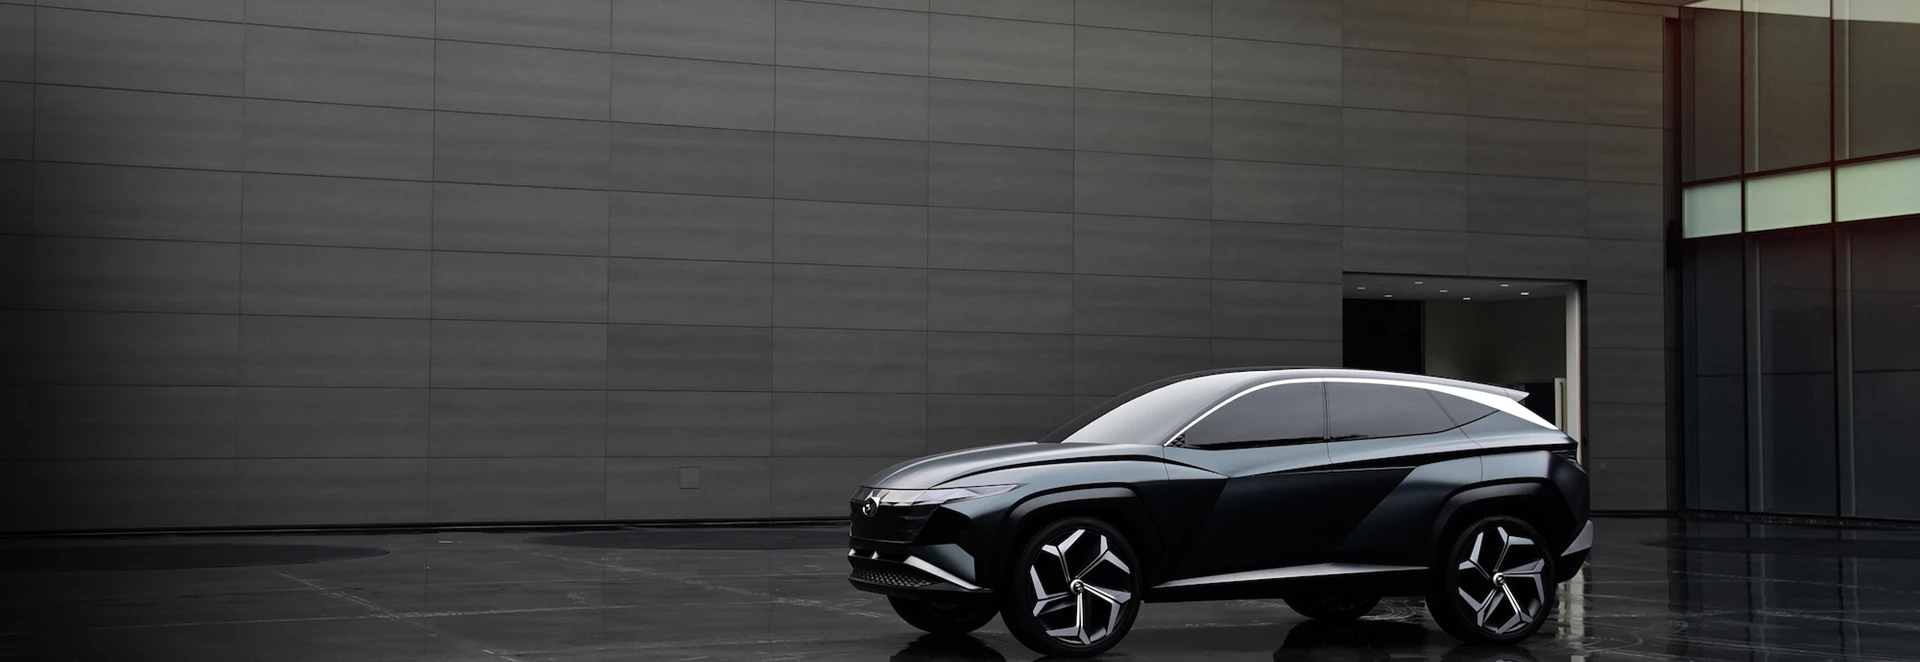 Hyundai Vision T Plug-in Hybrid SUV Concept revealed